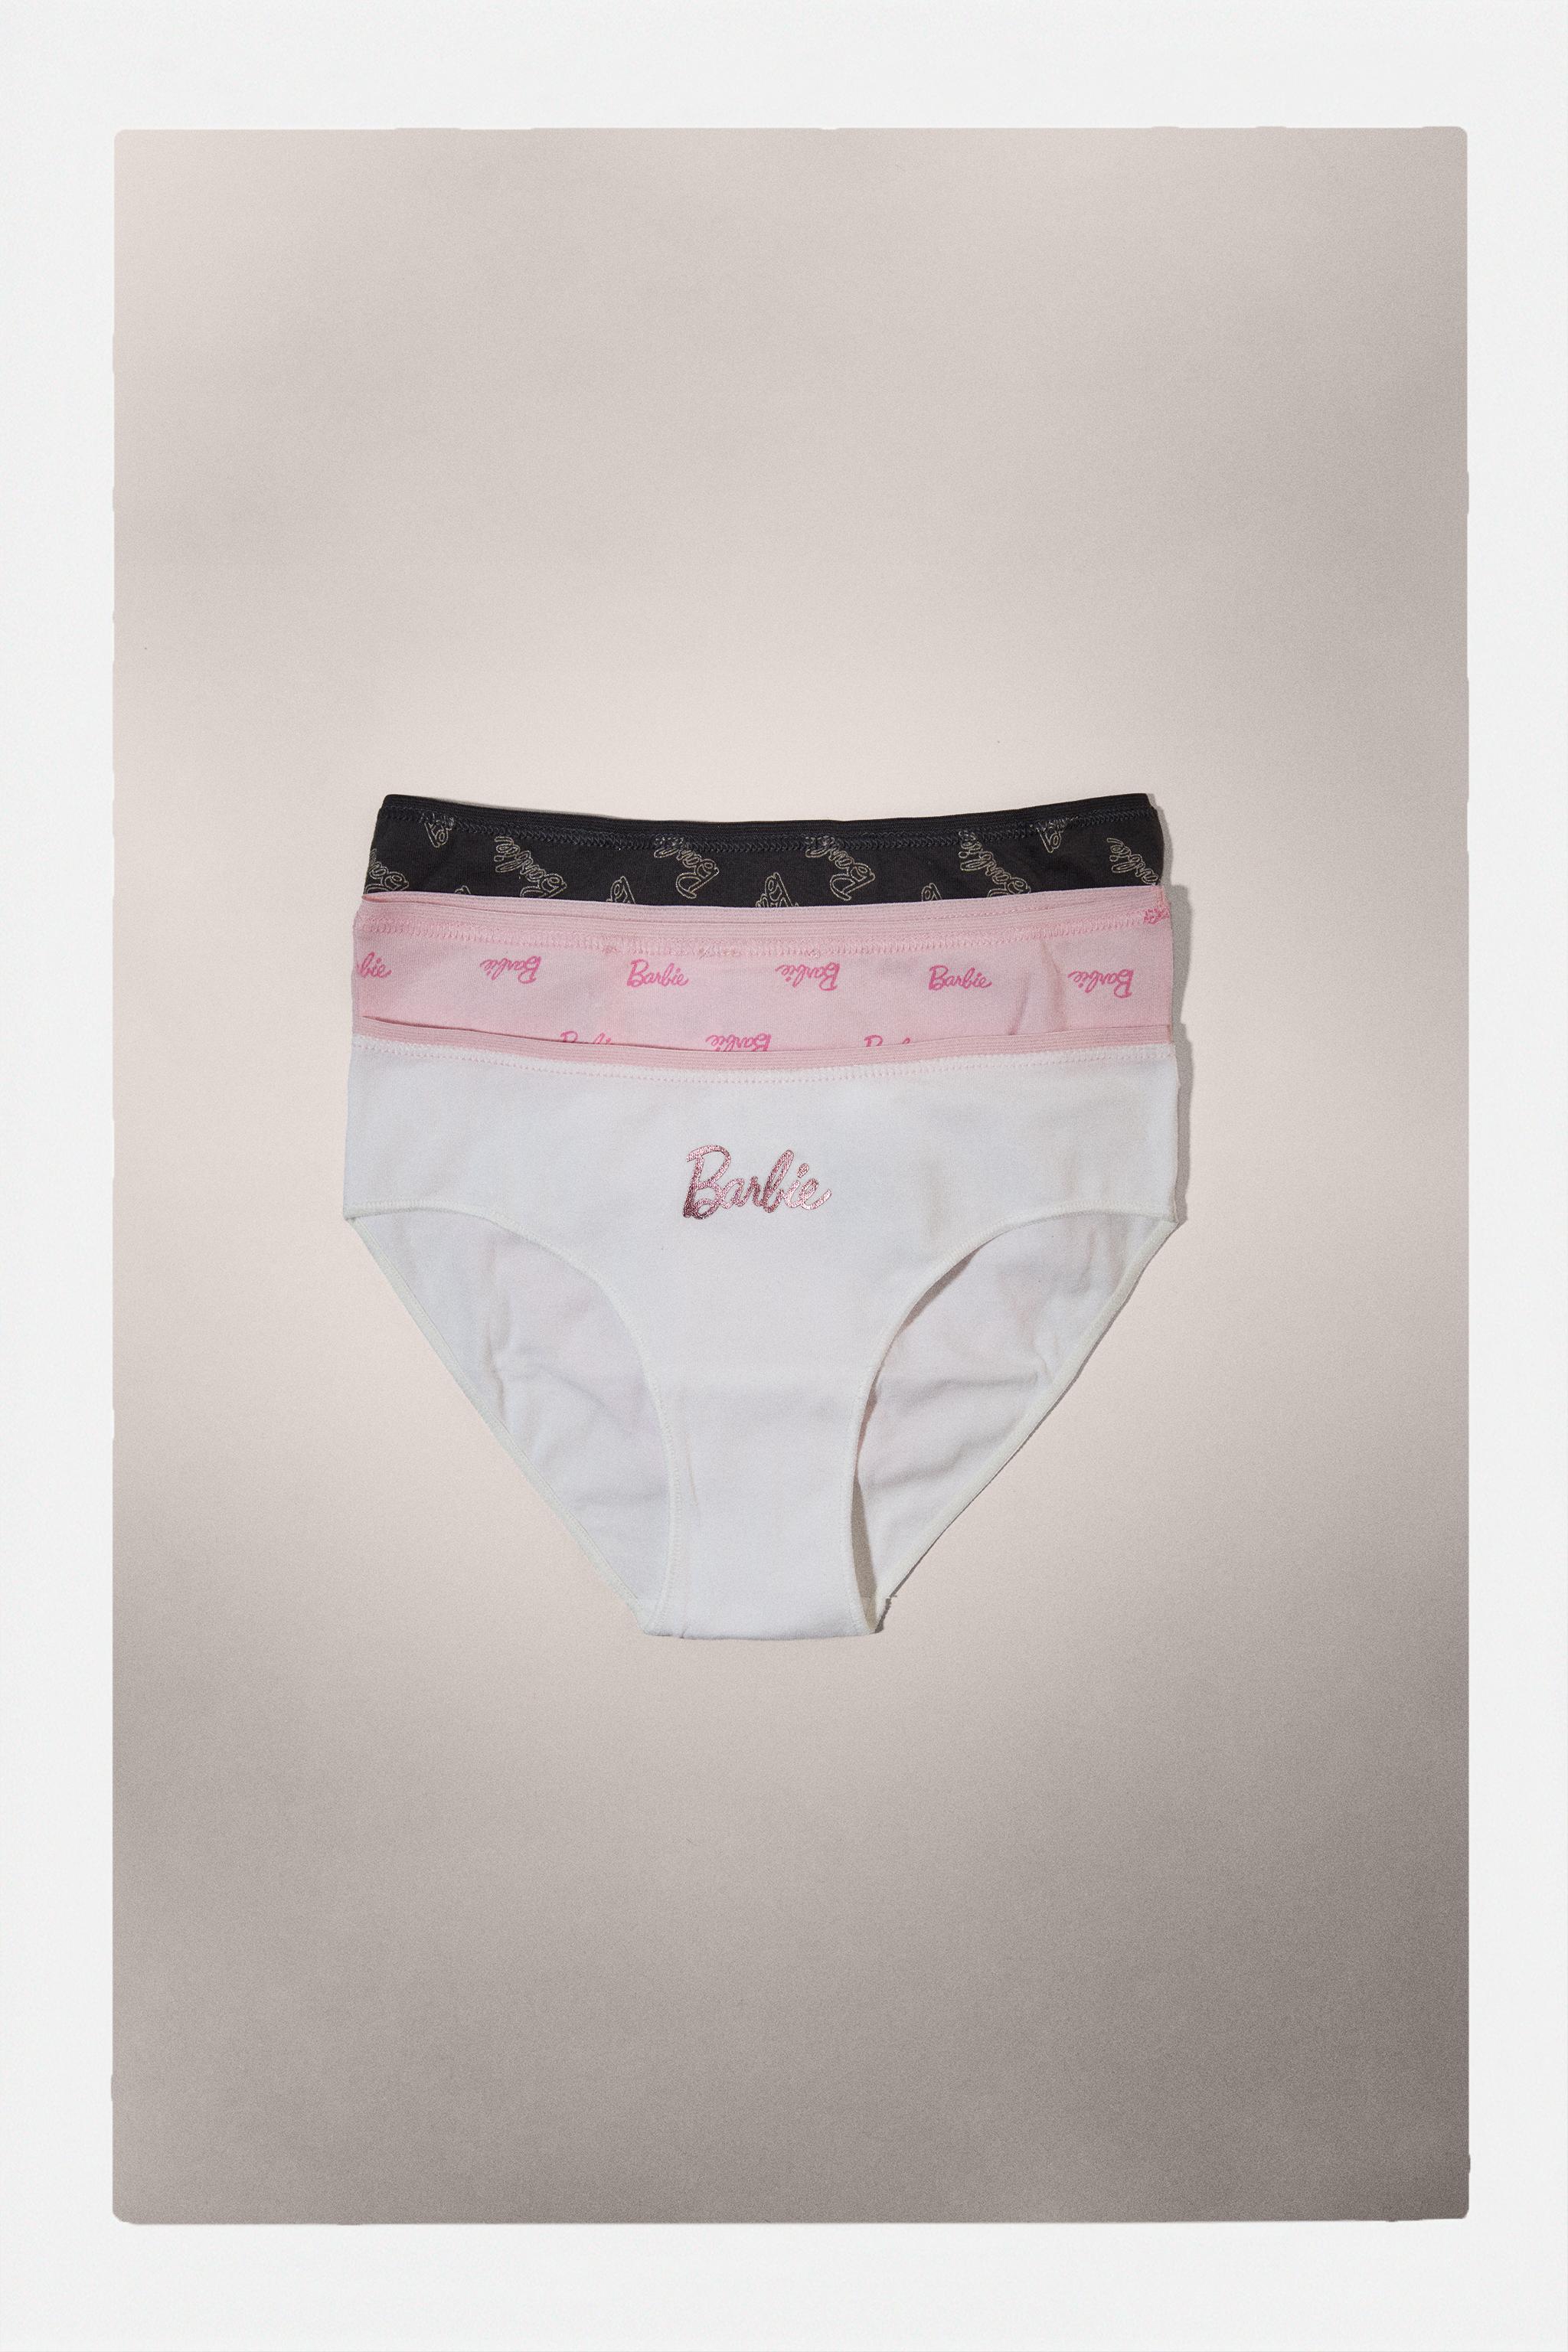 Girls Pink Cotton Boxer Kidley Panties Set For School & Seasons Sizes 3 14  Years OGU203031 From Mobeisiran, $11.74